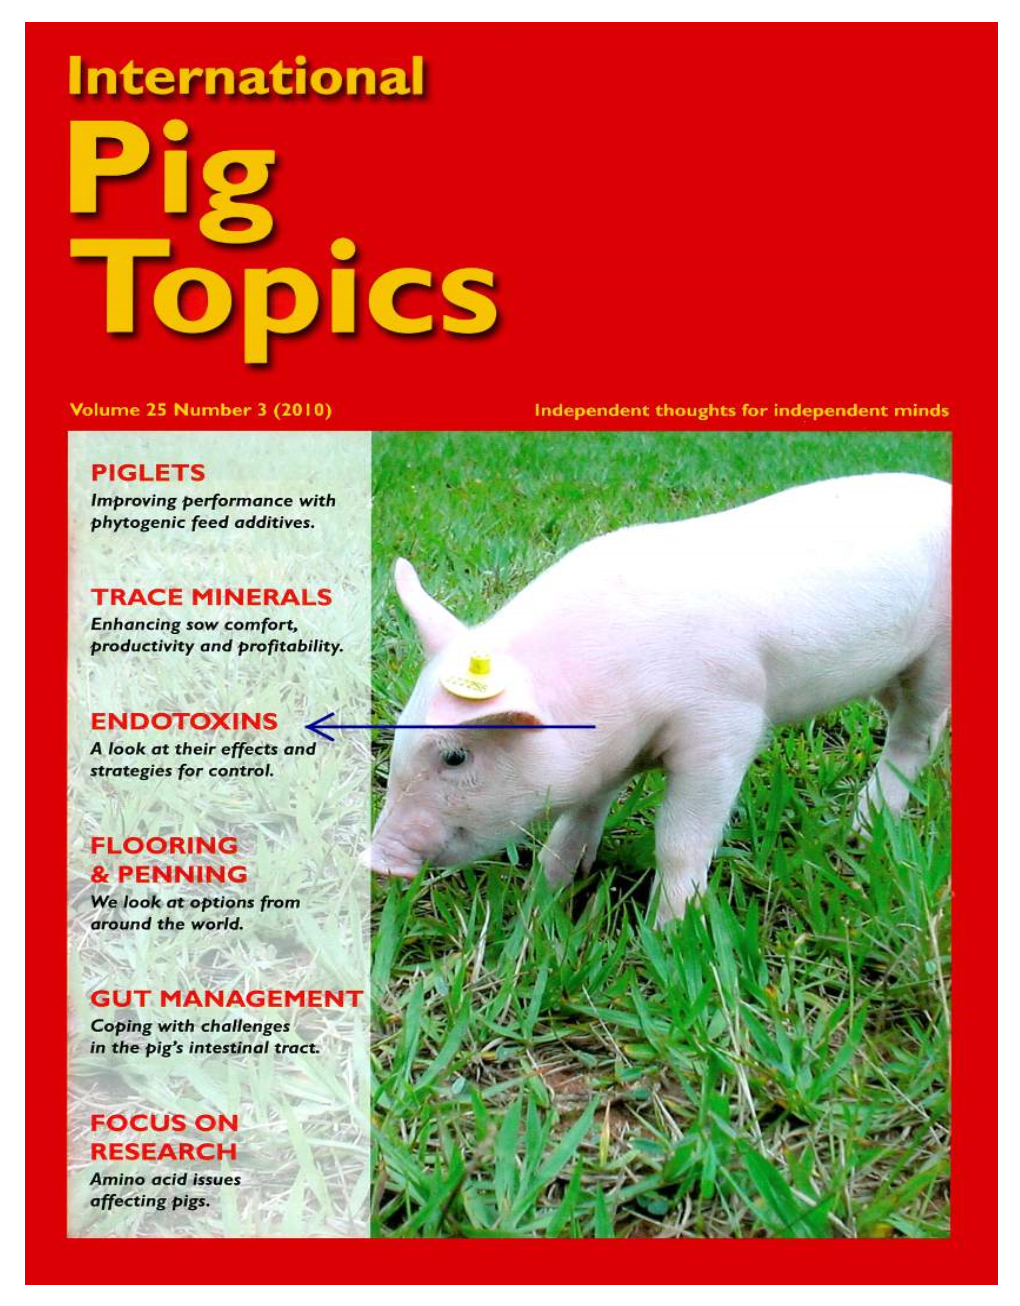 Endotoxins in Swine - Effects Structure